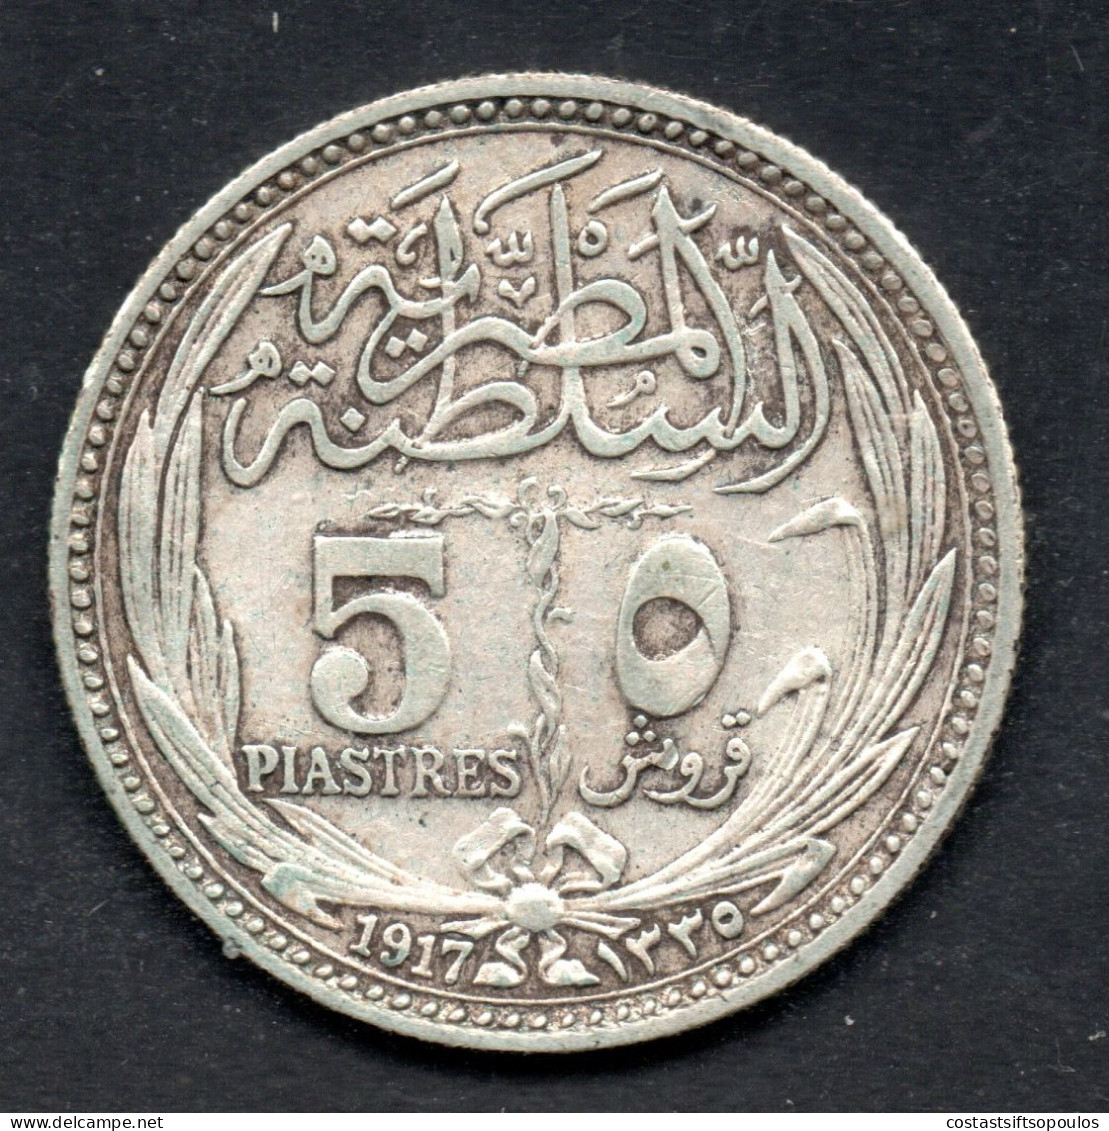 3106. EGYPT 1917 5 PIASTER VERY NICE SILVER COIN - Aegypten